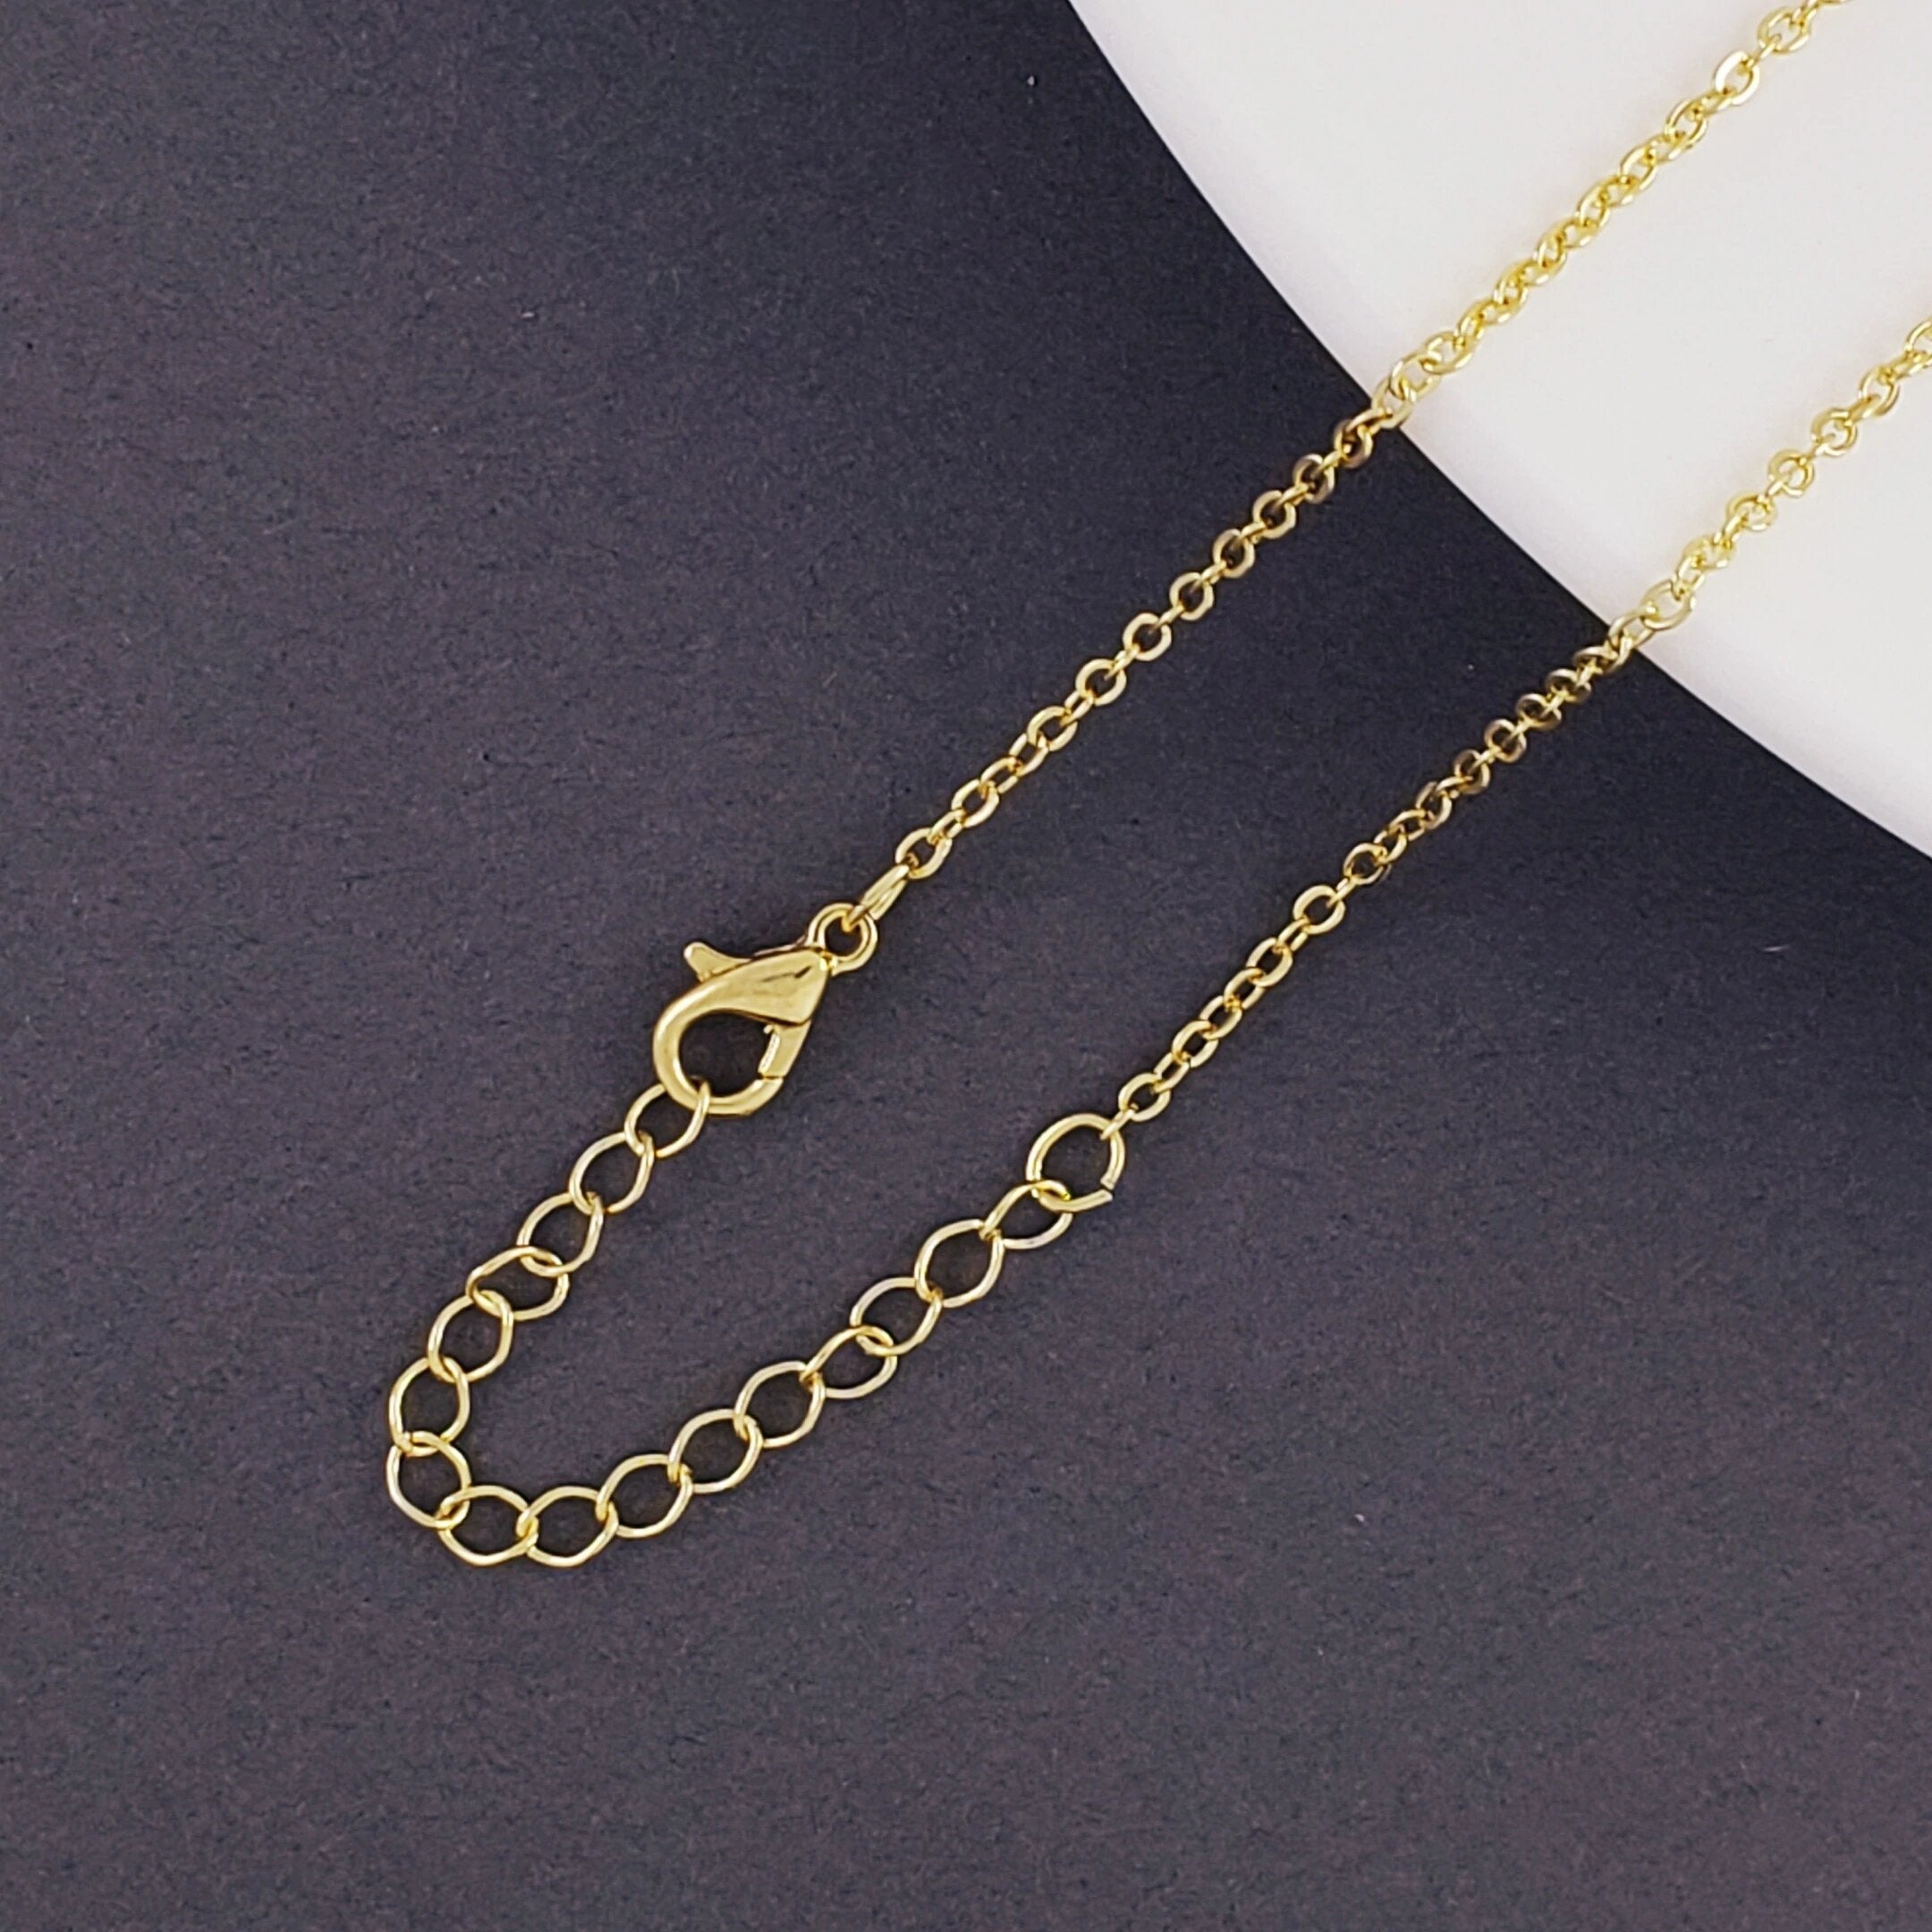 Copper Moon Blue Gold Enamel Necklace Pendant Chain For Women